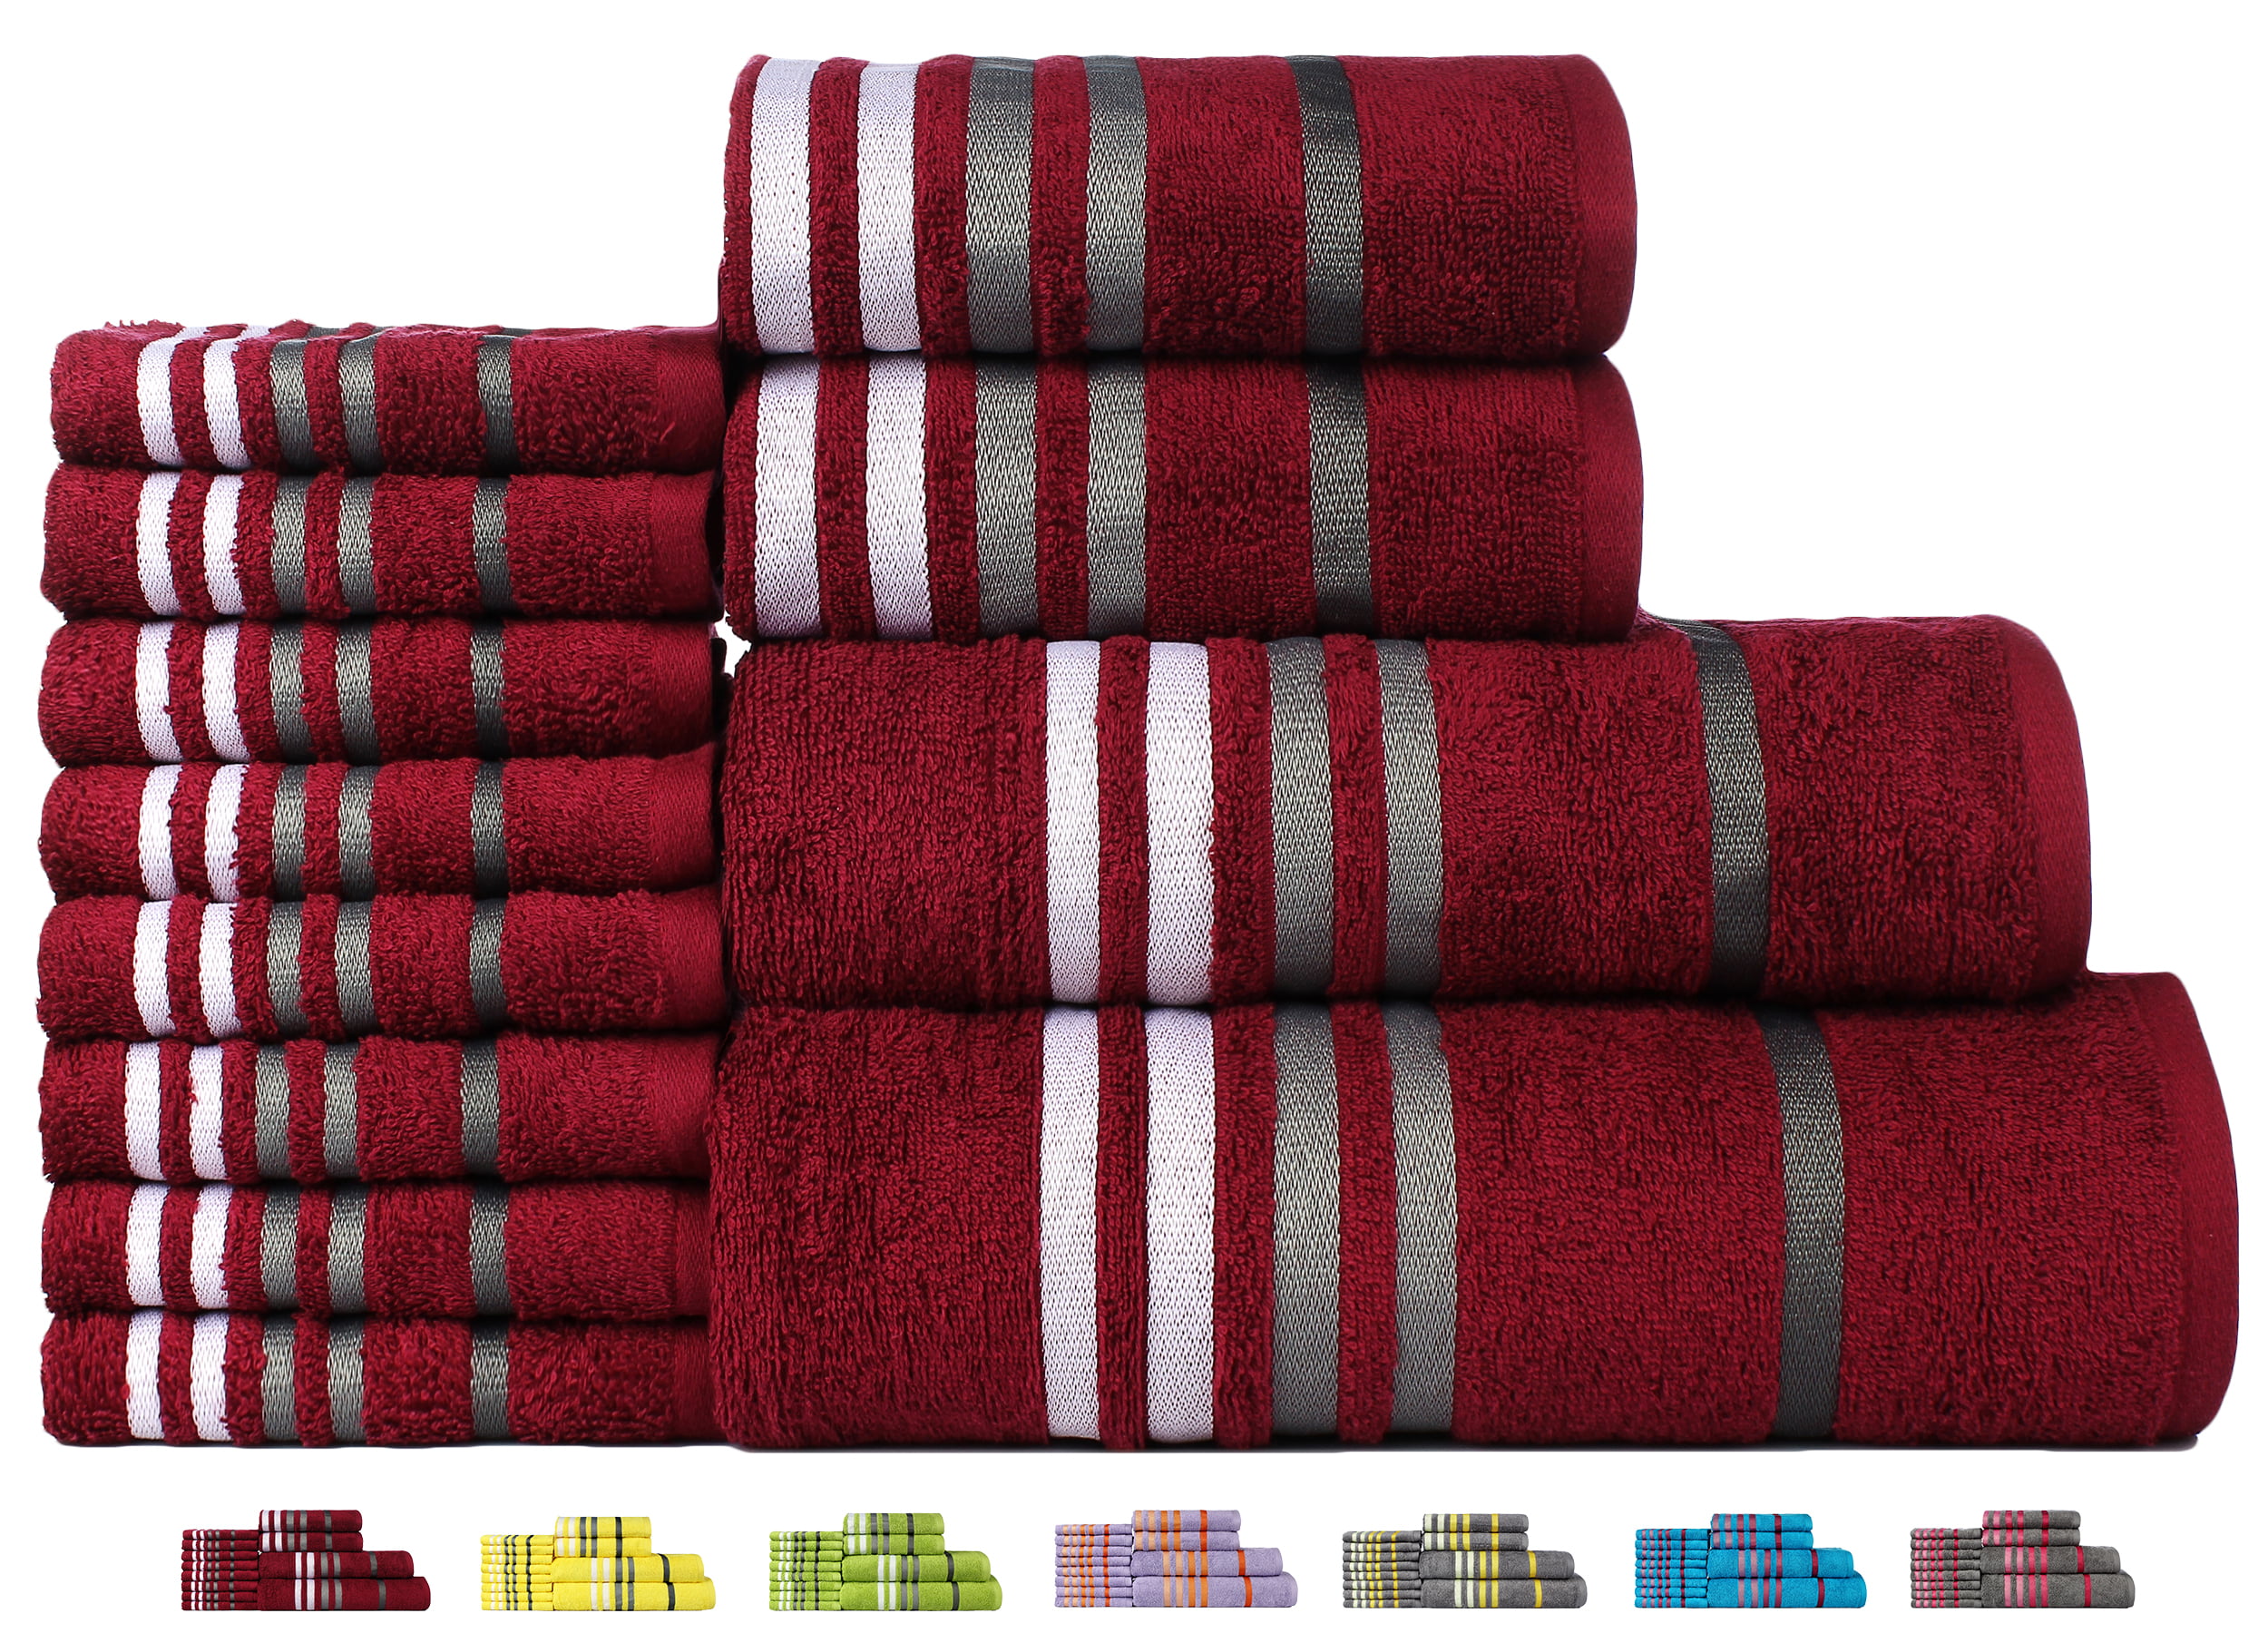 Casa Copenhagen Exotic Cotton 475 GSM 4 Pack Hand Towels Hot Pink